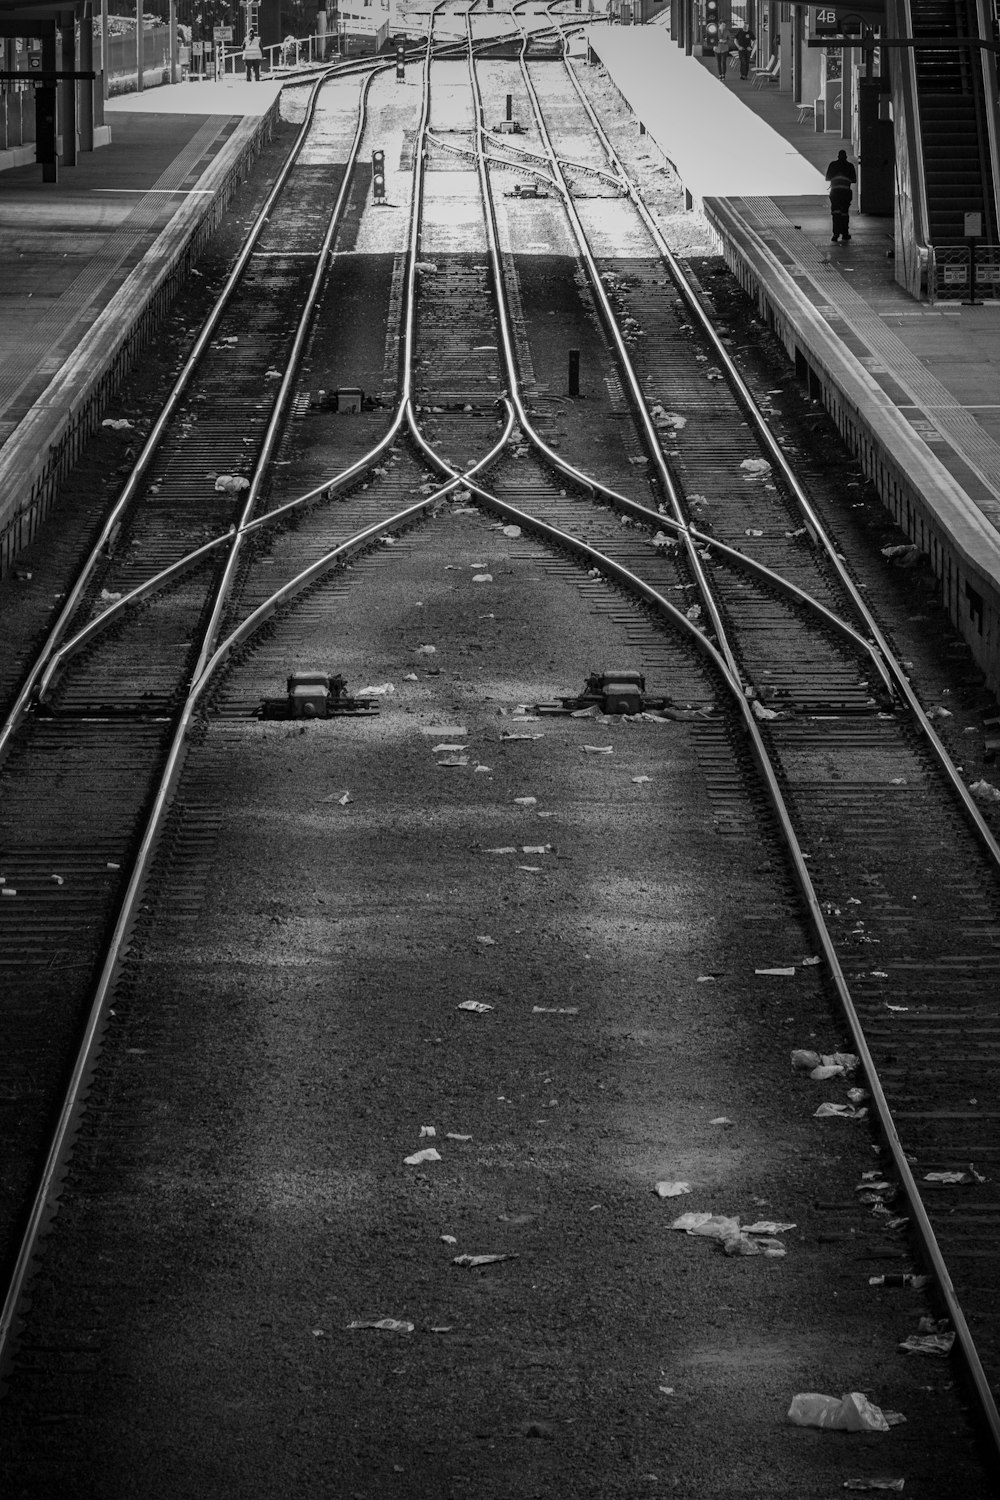 fotografia in scala di grigi di una ferrovia vuota